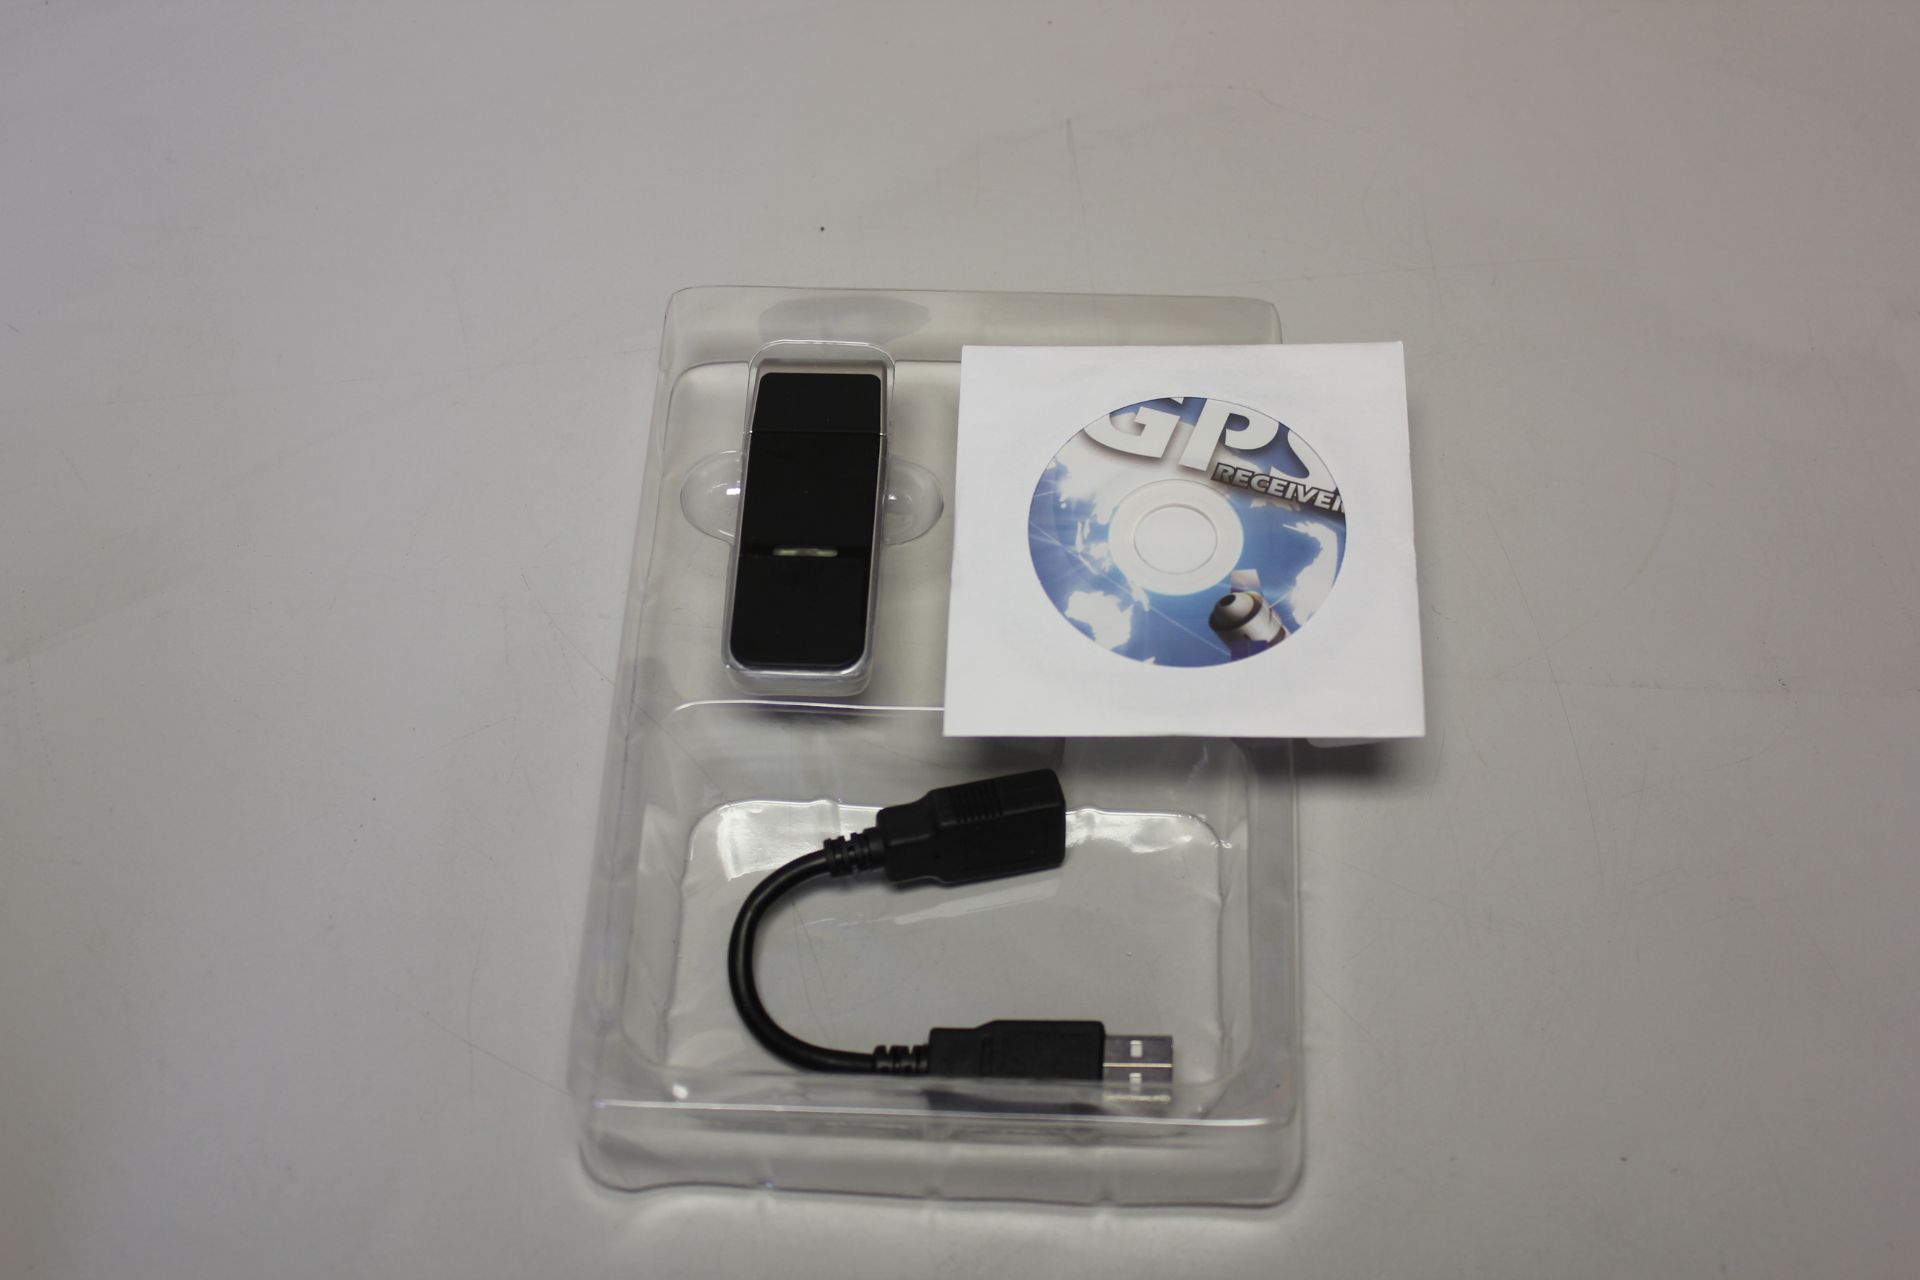 GPS USB DONGLE - Image 5 of 7